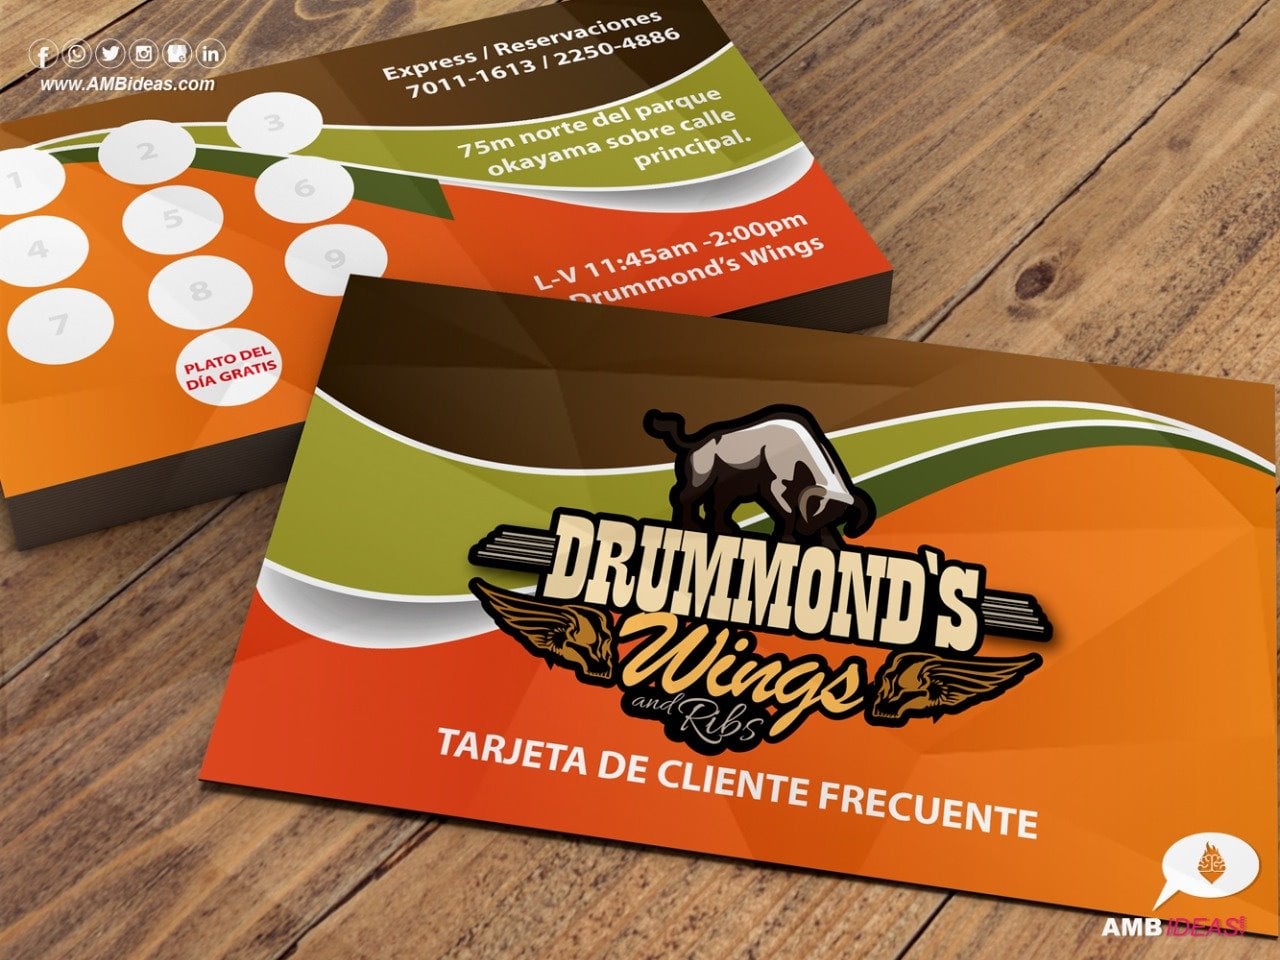 DRUMMONDS - 5